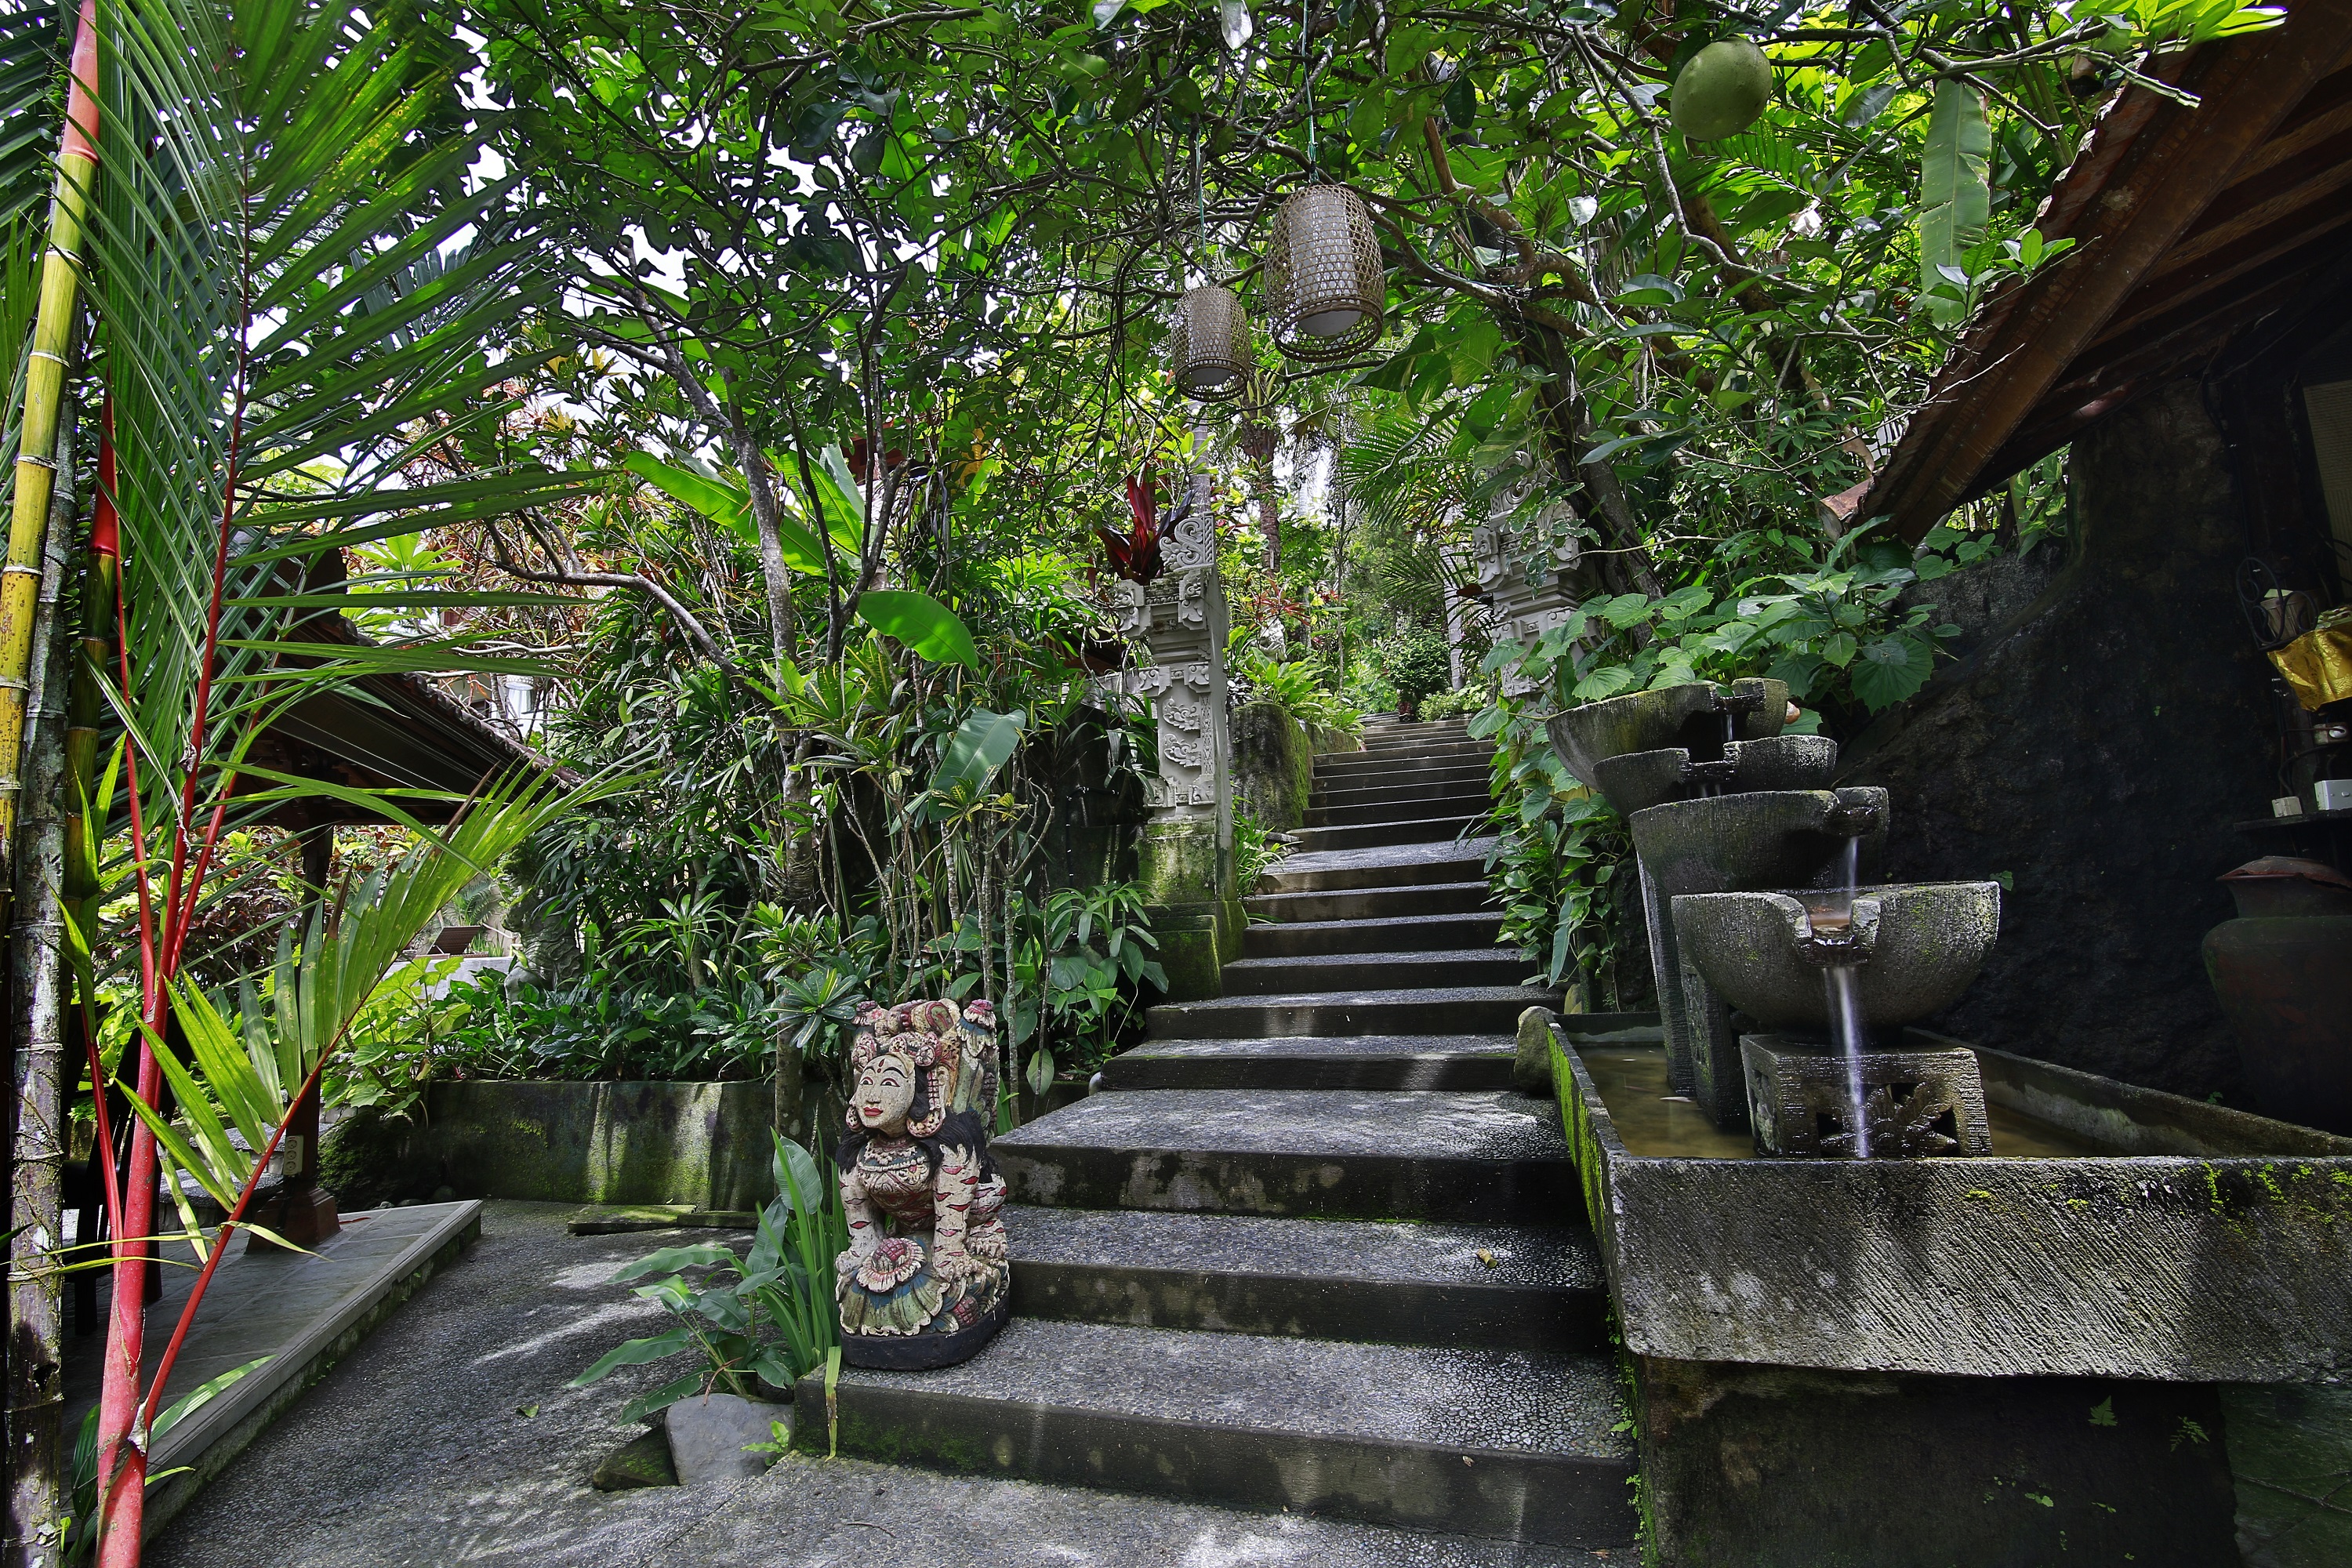 Bali Spirit Hotel and Spa